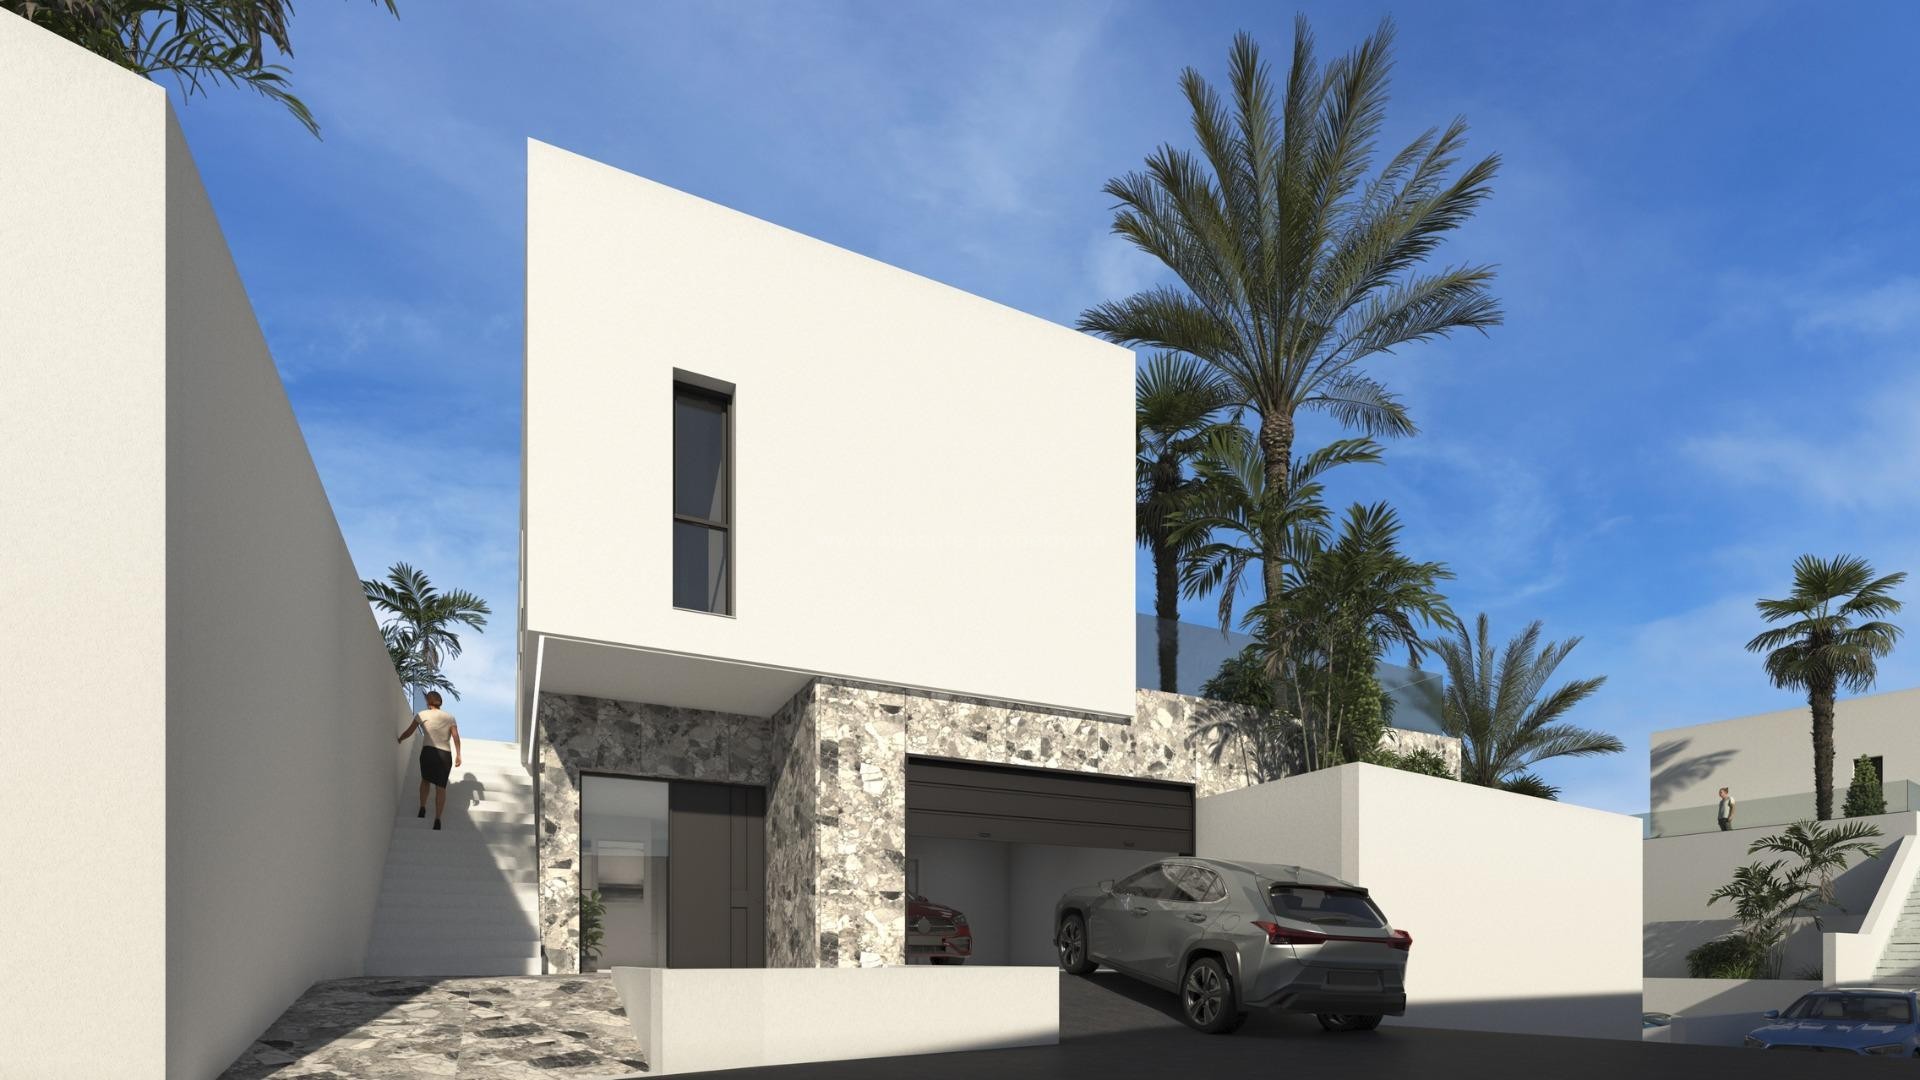 New luxury villas in Finestrat near Benidorm, 4 bedrooms, 5 bathrooms, semi-basement, terrace with swimming pool and fantastic views of Benidorm, double garage